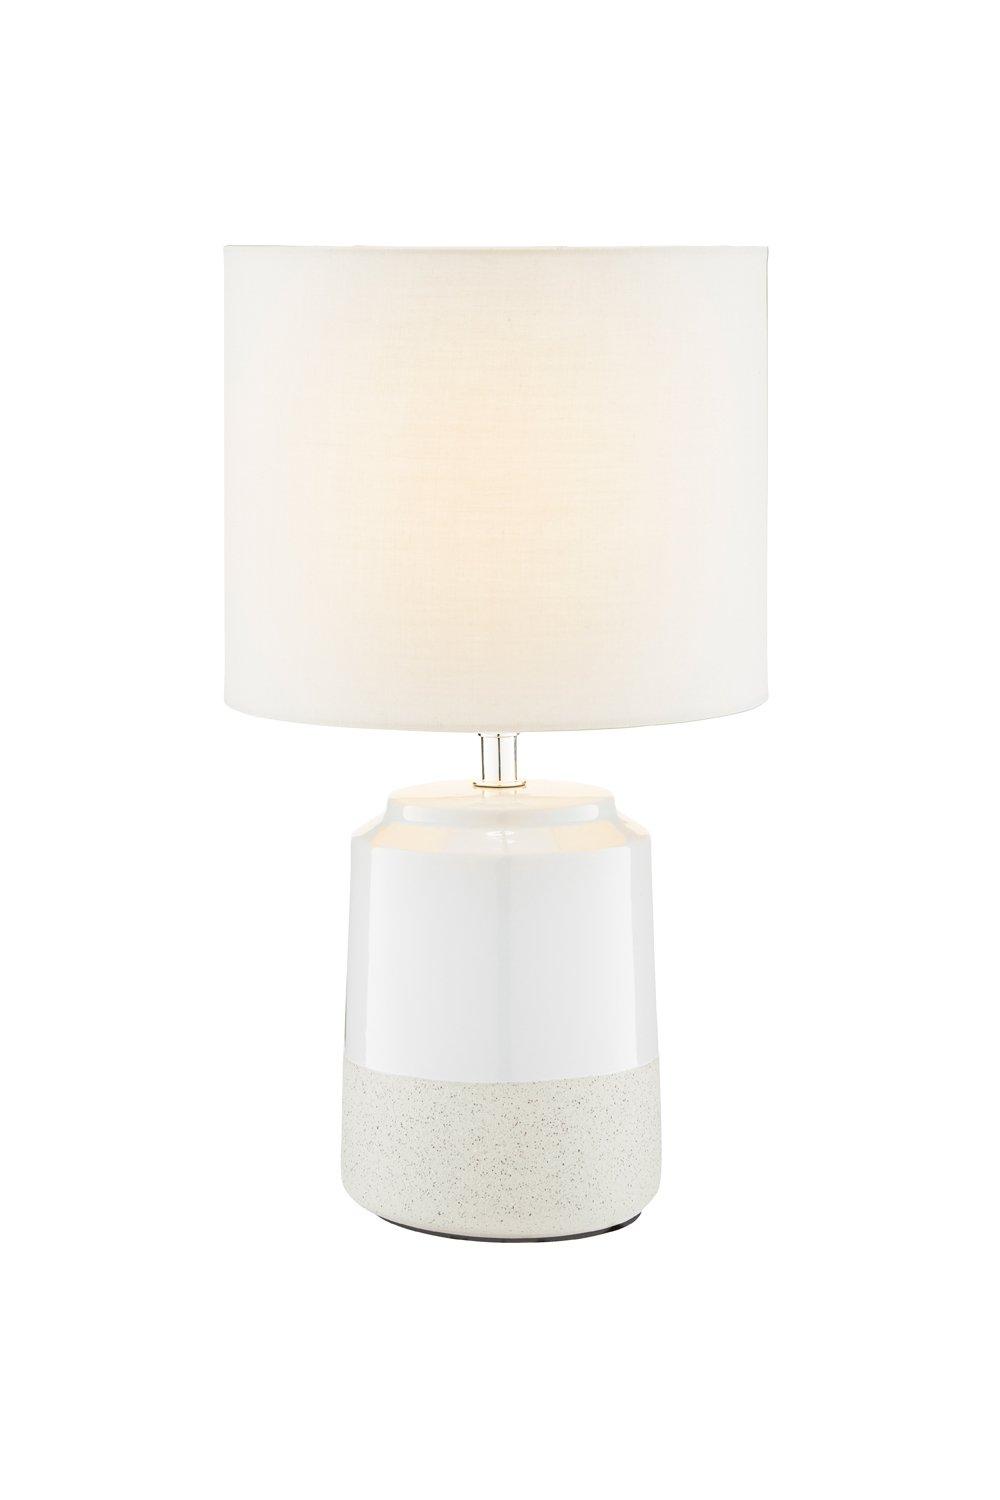 'Pop' Table Lamp White